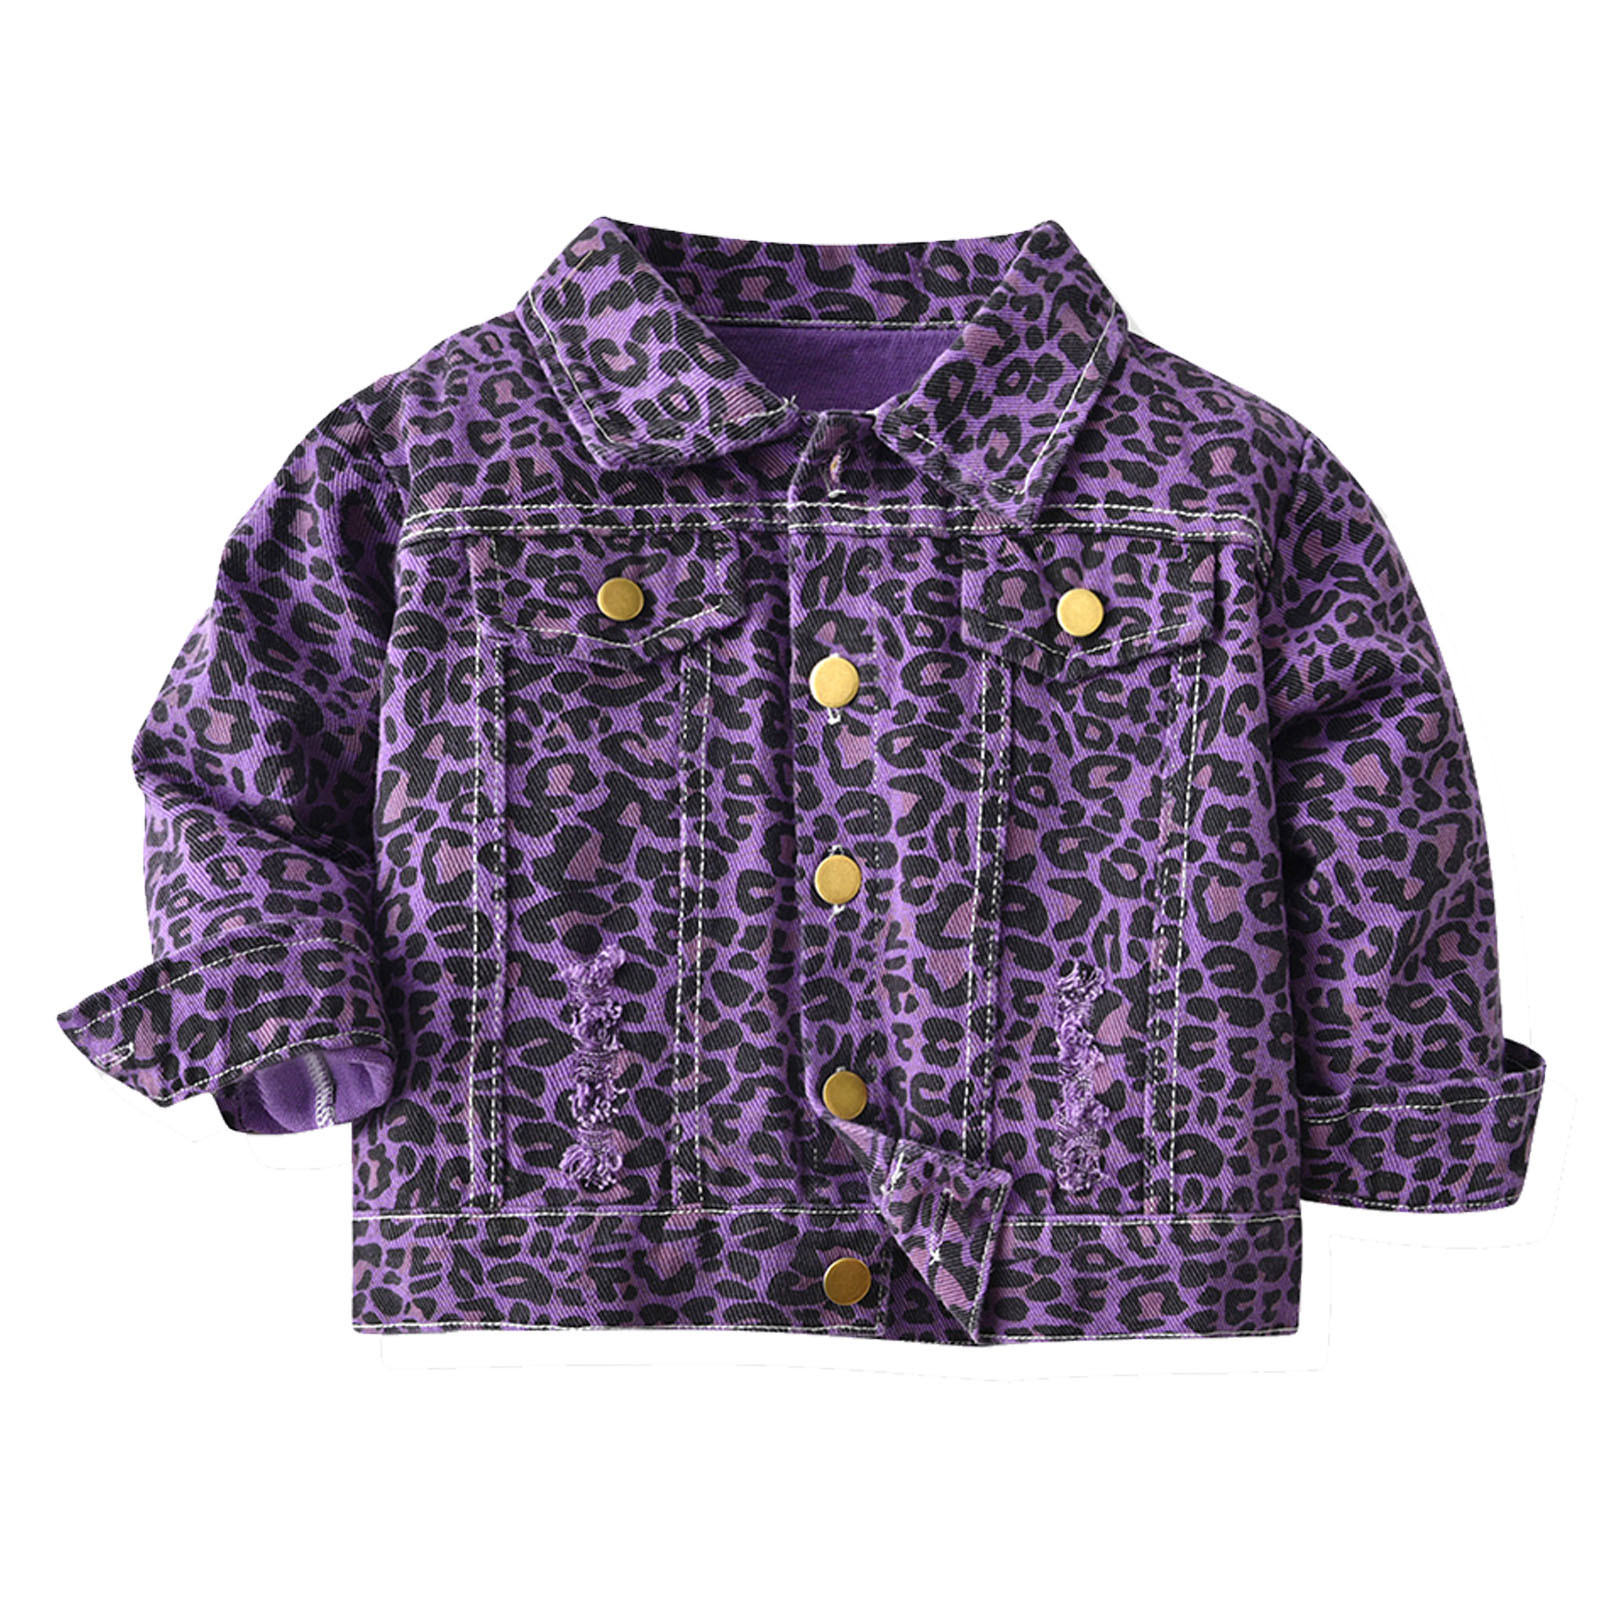 Dadaria Toddler Jacket 3Months-6Years Fashion Kids Coat Boys Girls Thick Coat Denim Print Jacket Clothes Children's Jacket Purple 4-5 Years,Toddler - image 1 of 9